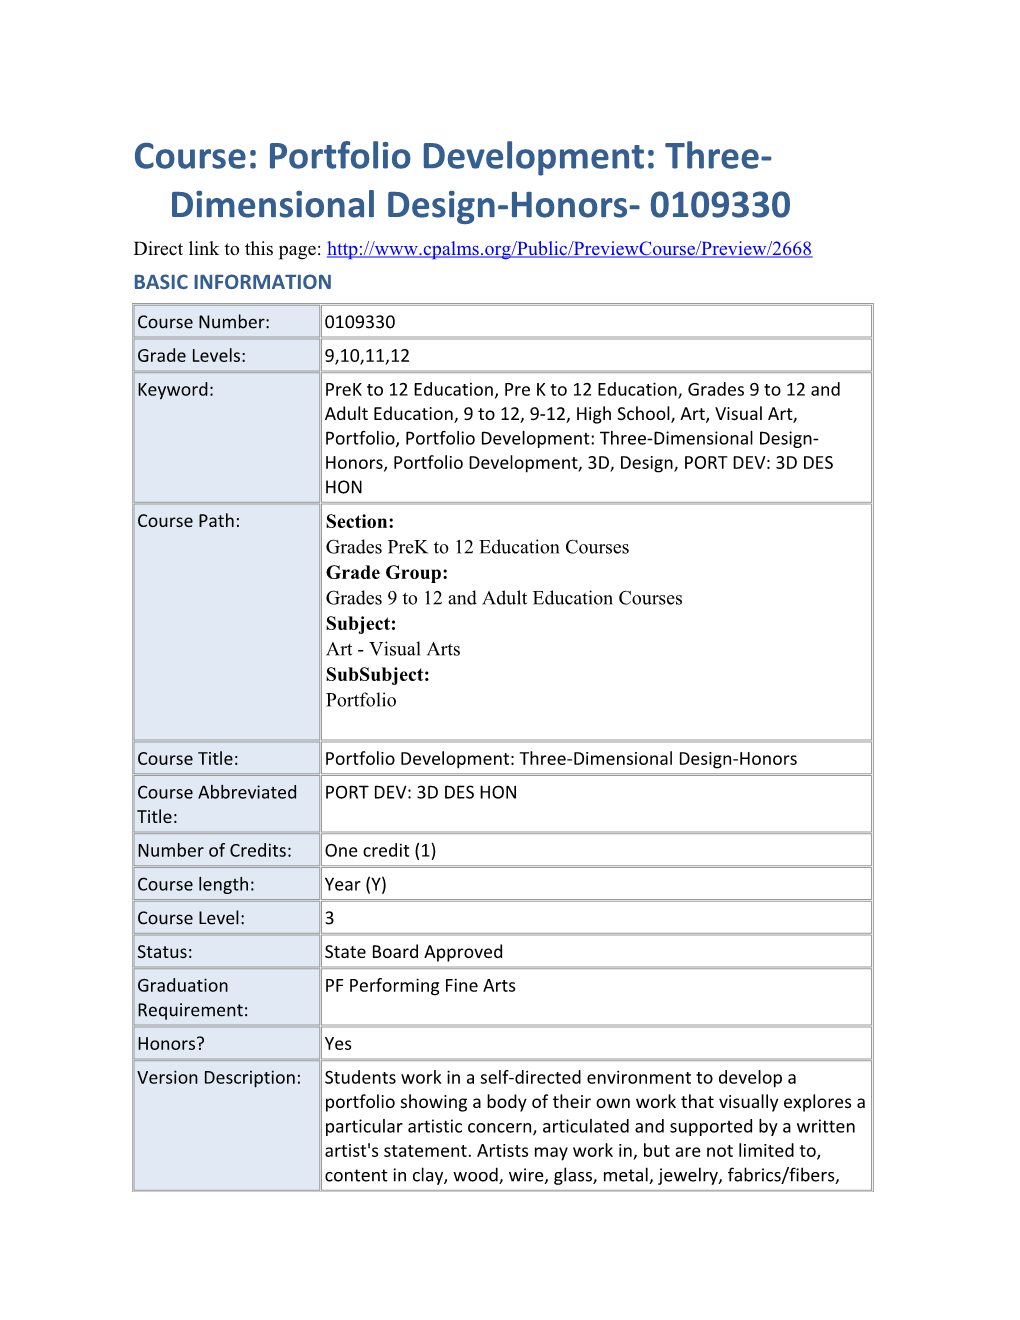 Course: Portfolio Development: Three-Dimensional Design-Honors- 0109330